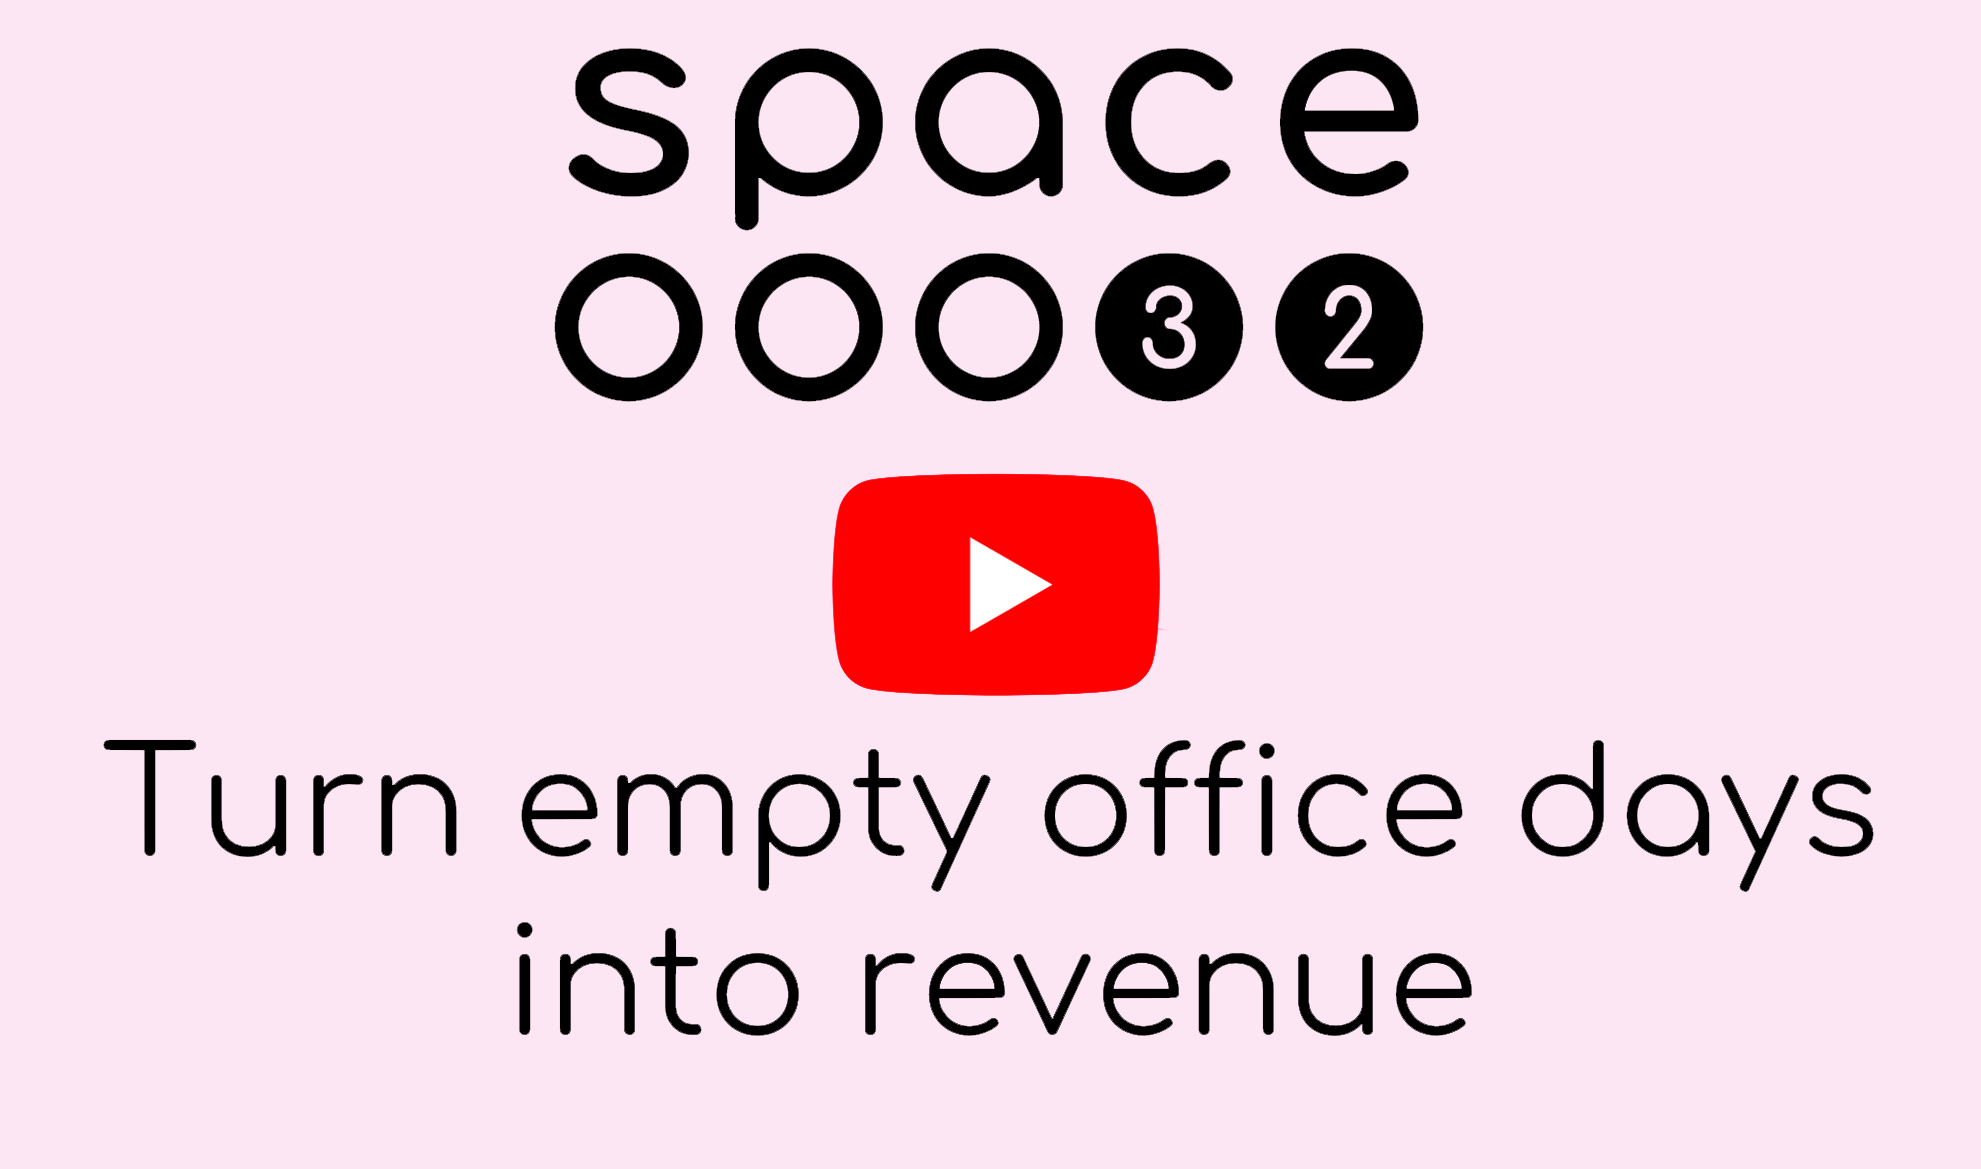 Turn empty office days into revenue